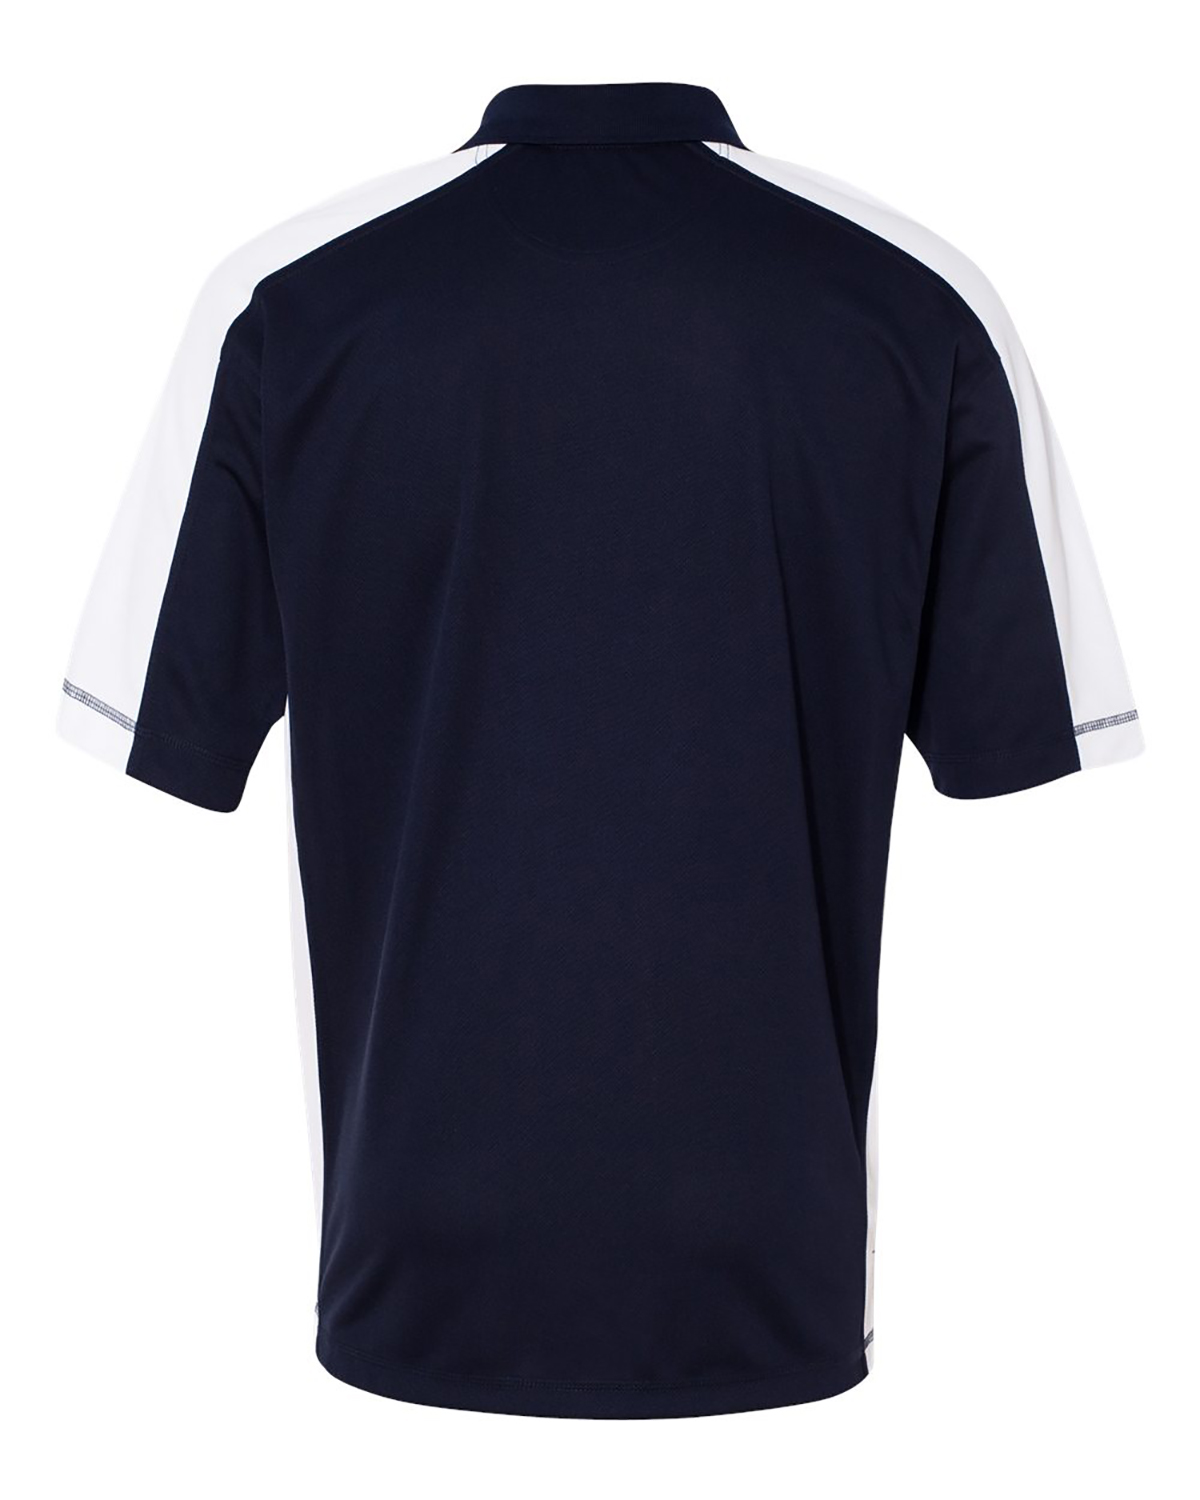 'FeatherLite 0465 Colorblocked Moisture Free Mesh Sport Shirt'